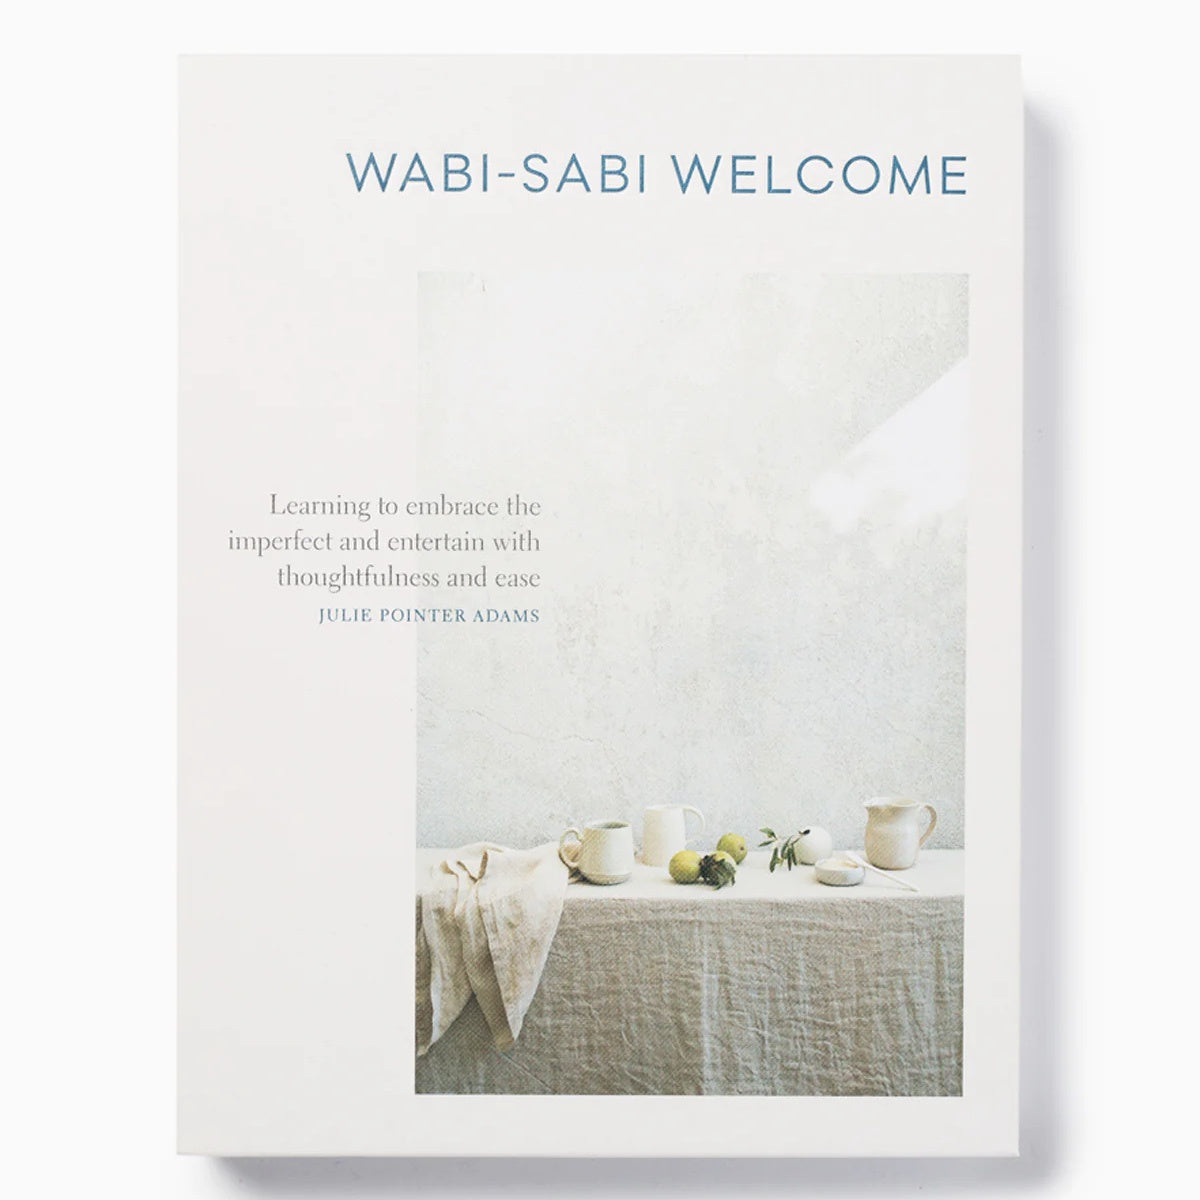 WABI - SABI WELCOME